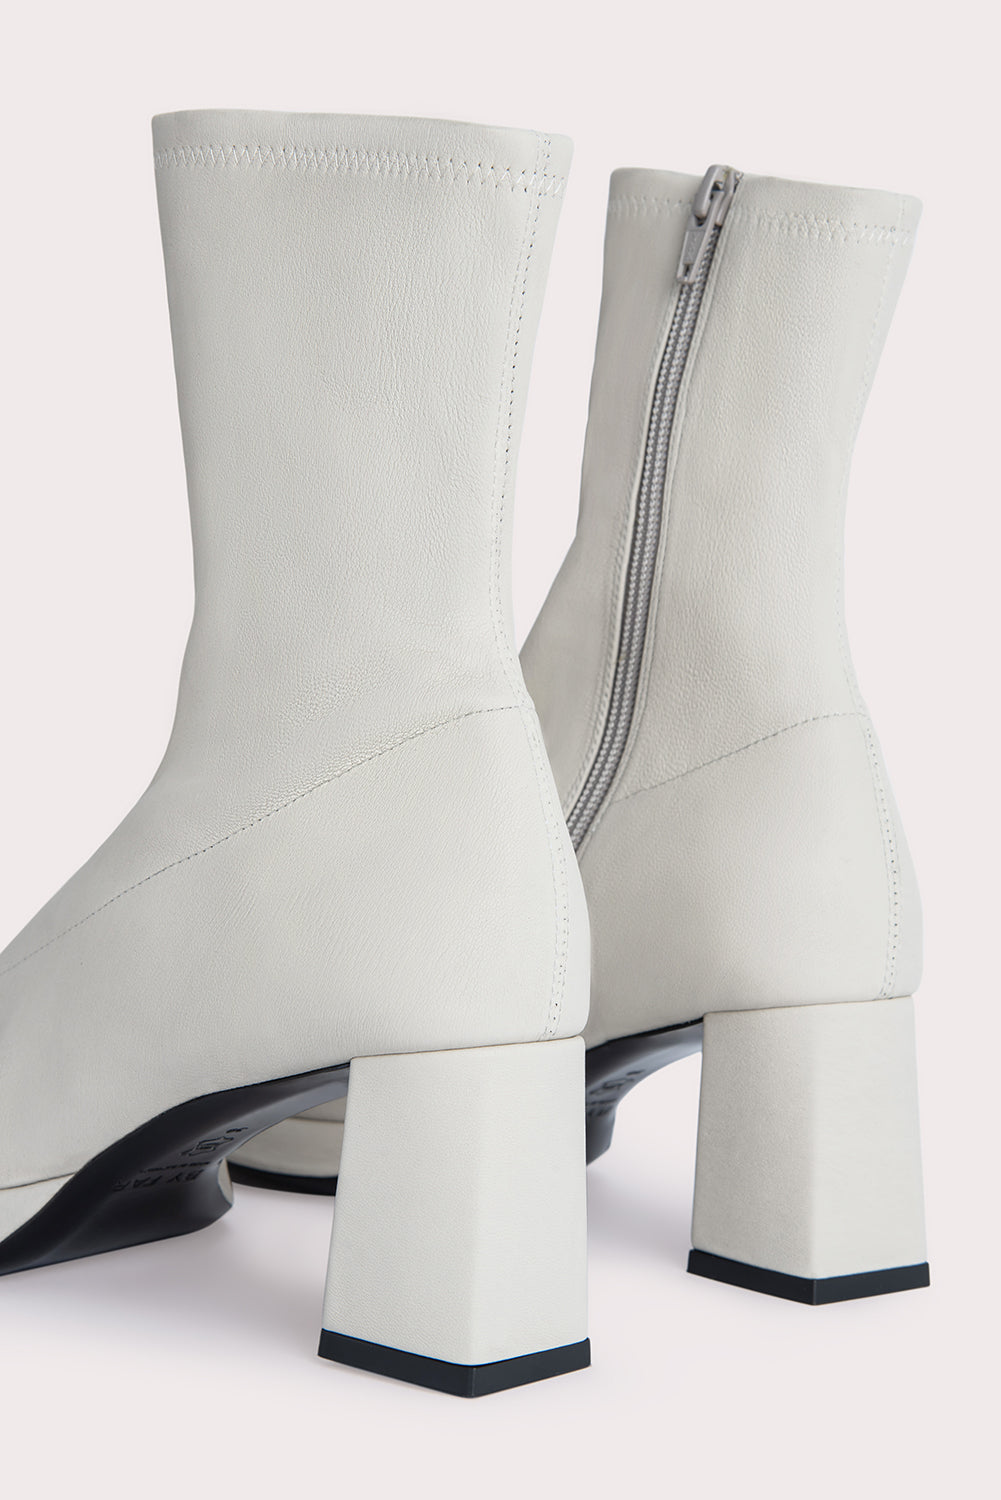 14cm Boot - Bianco